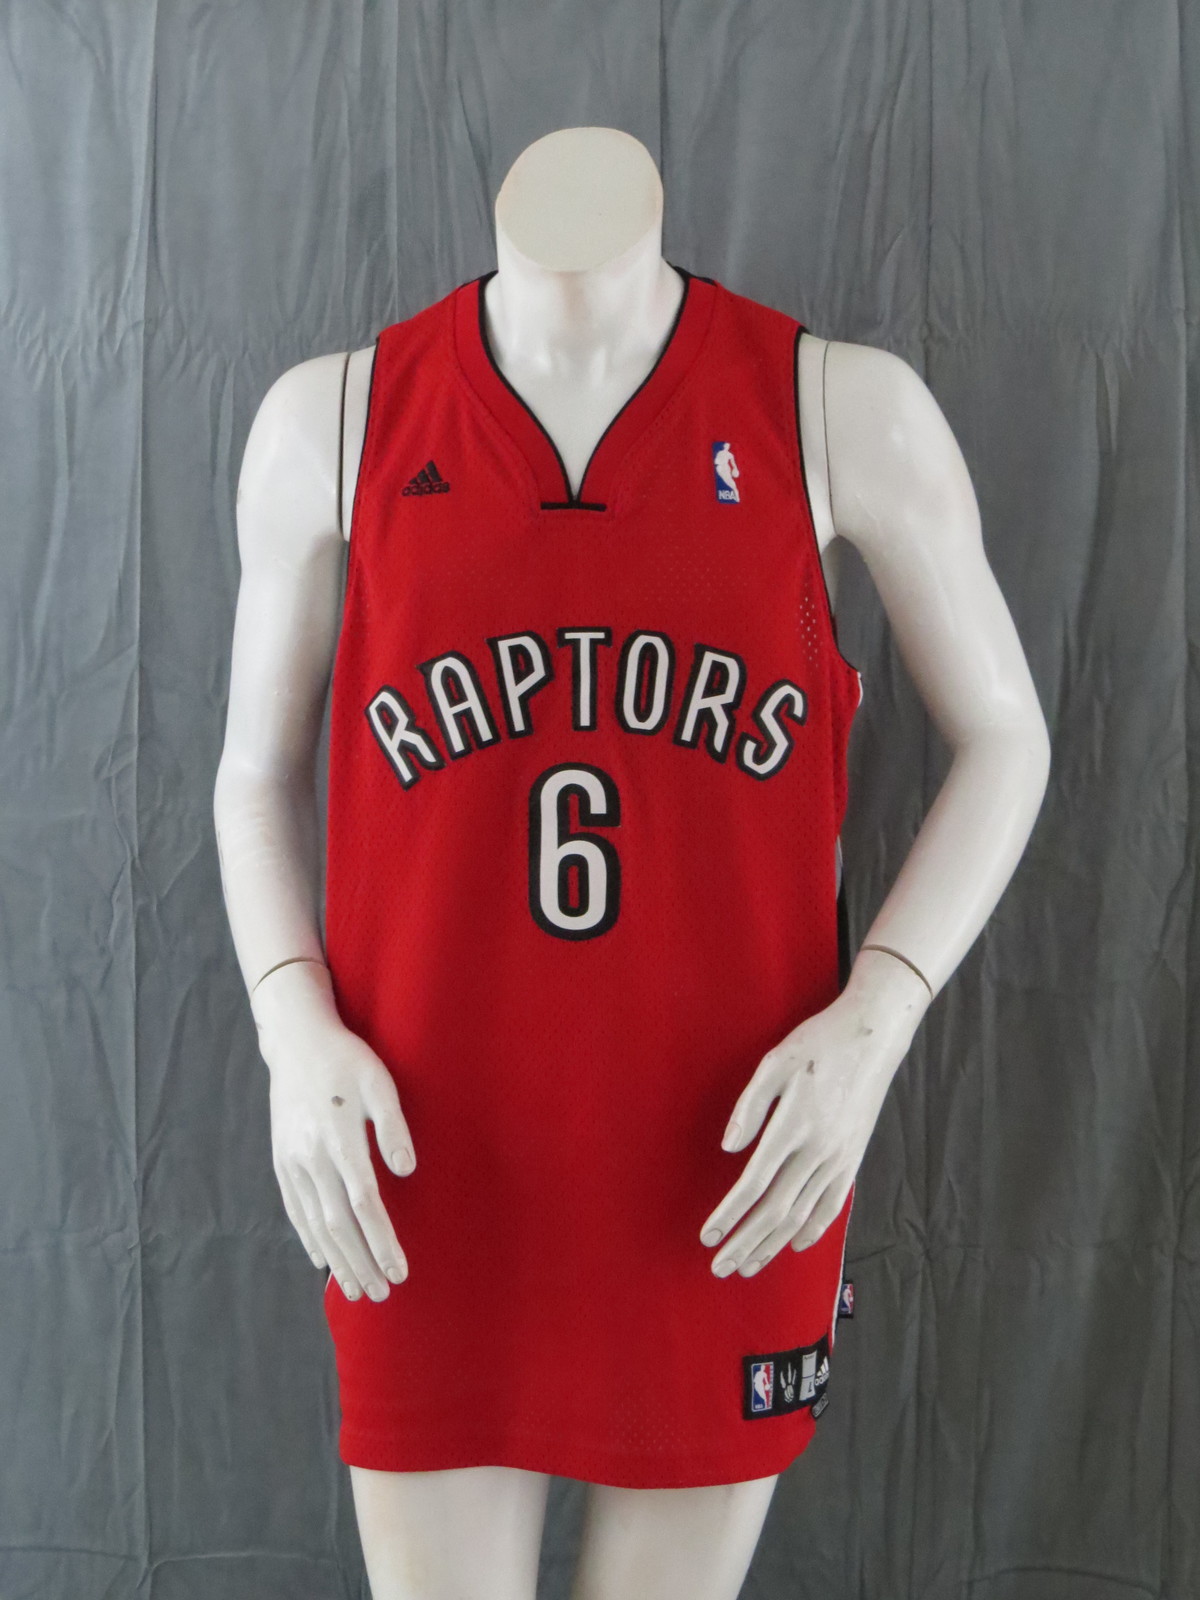 Miami Heat #6 Lebron James NBA Authentic Adidas Jersey - Men's Size 50